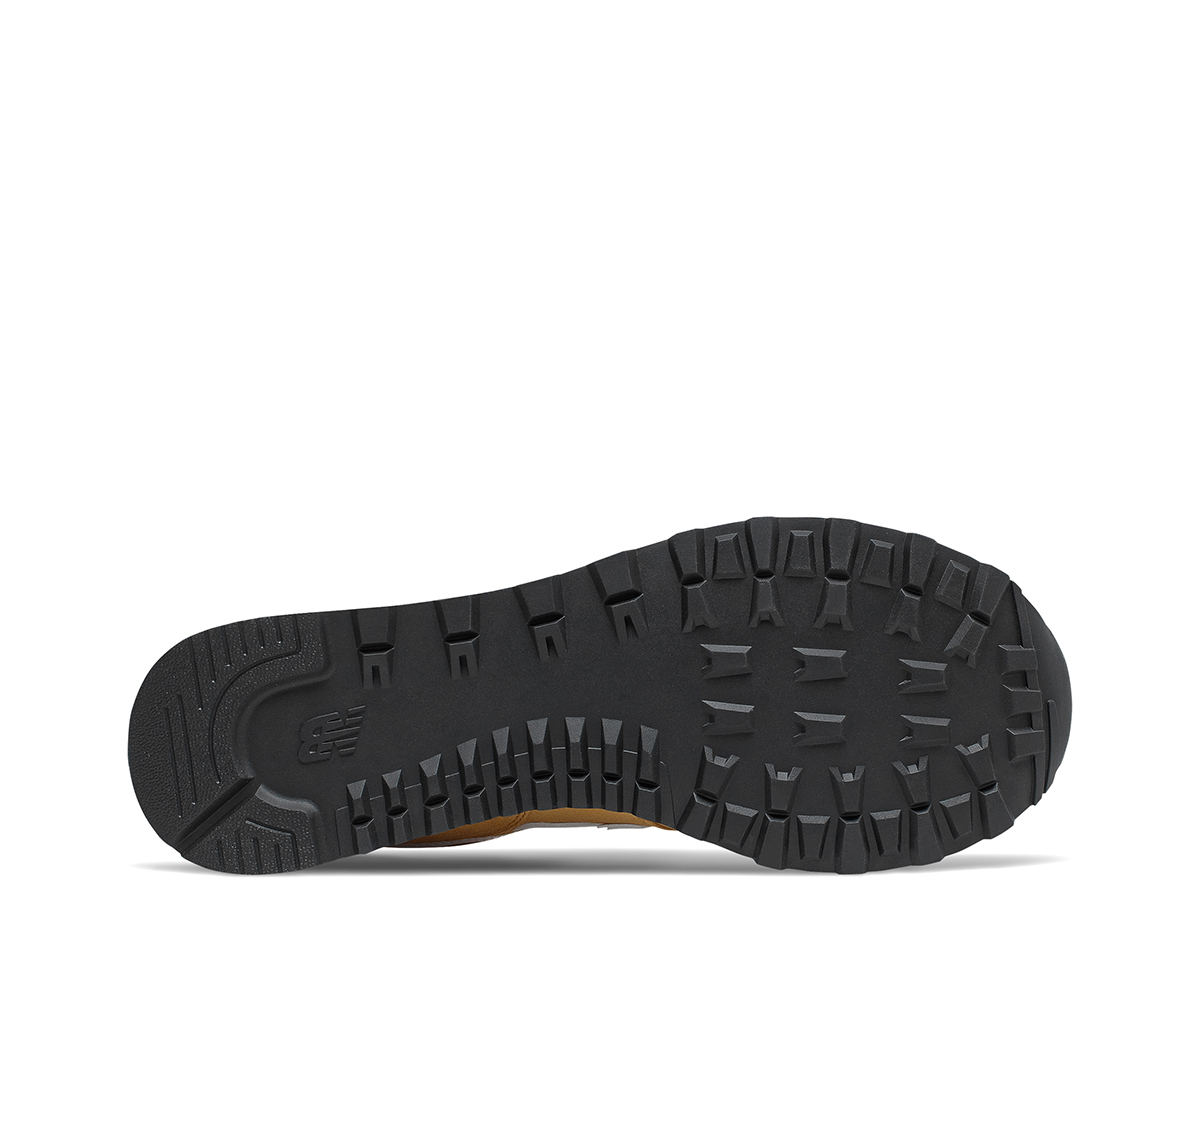 New Balance 574 - Classic - Workwear sole